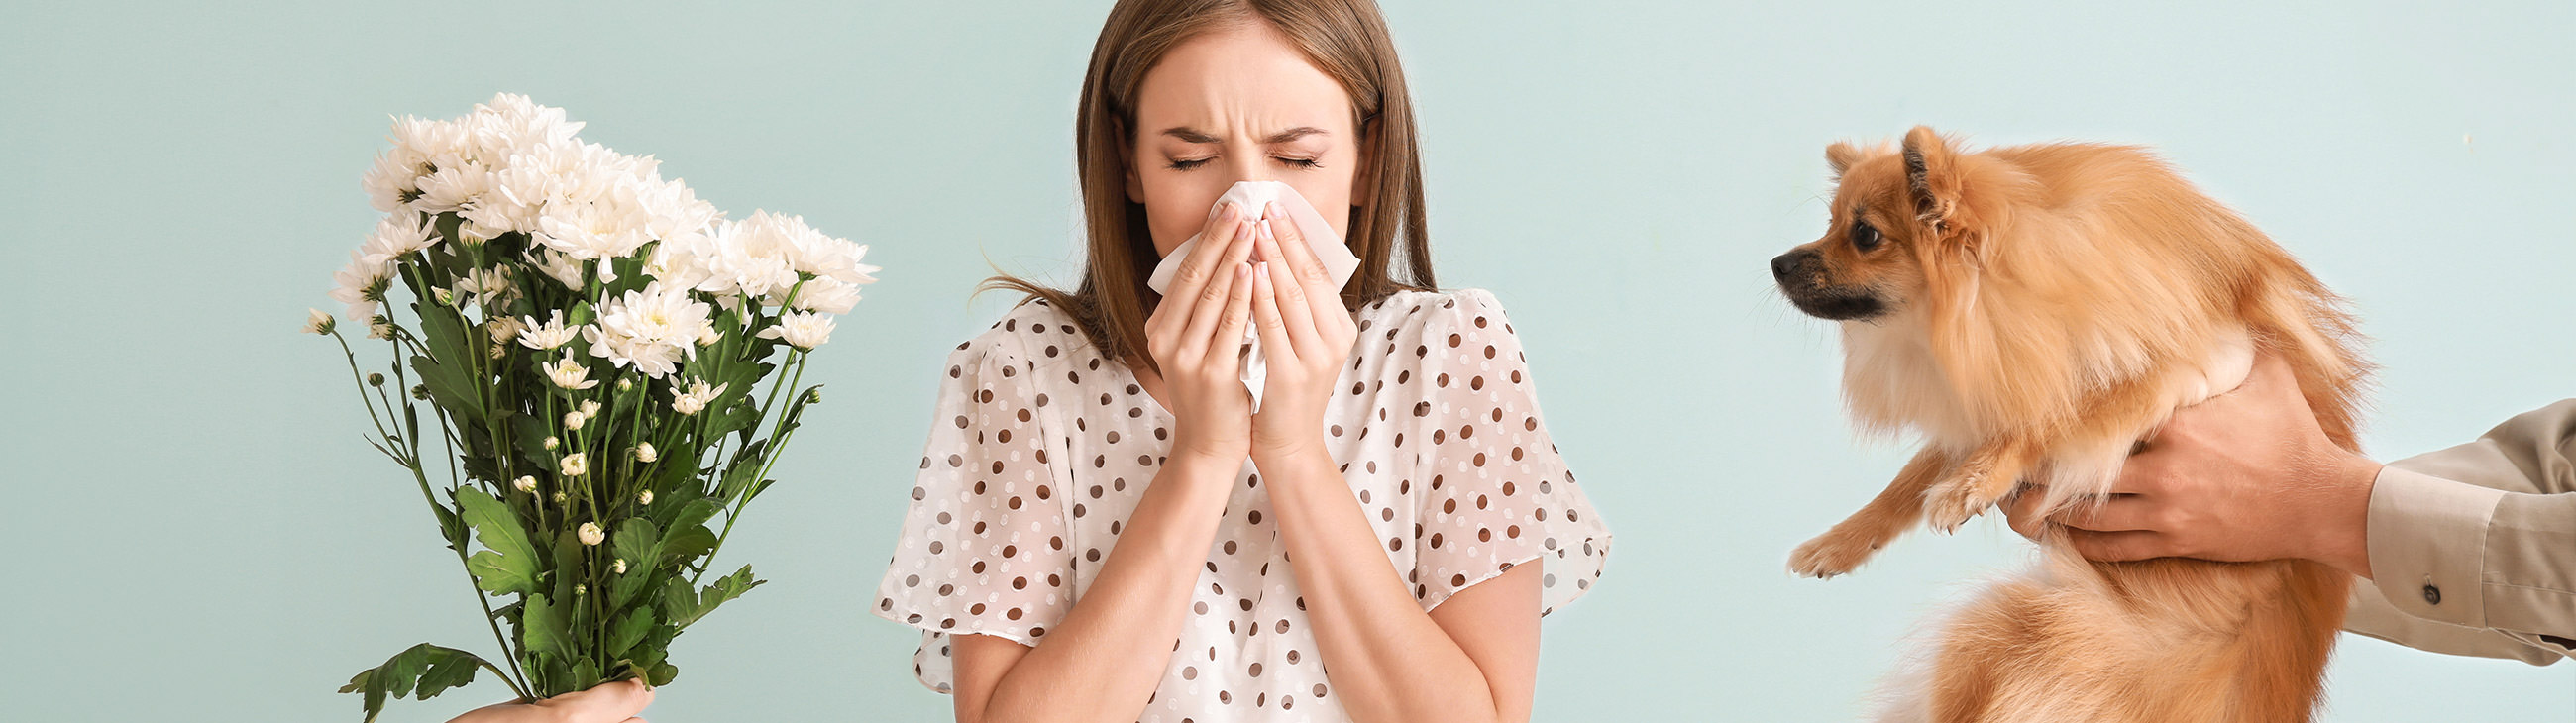 Is eczema an allergy?